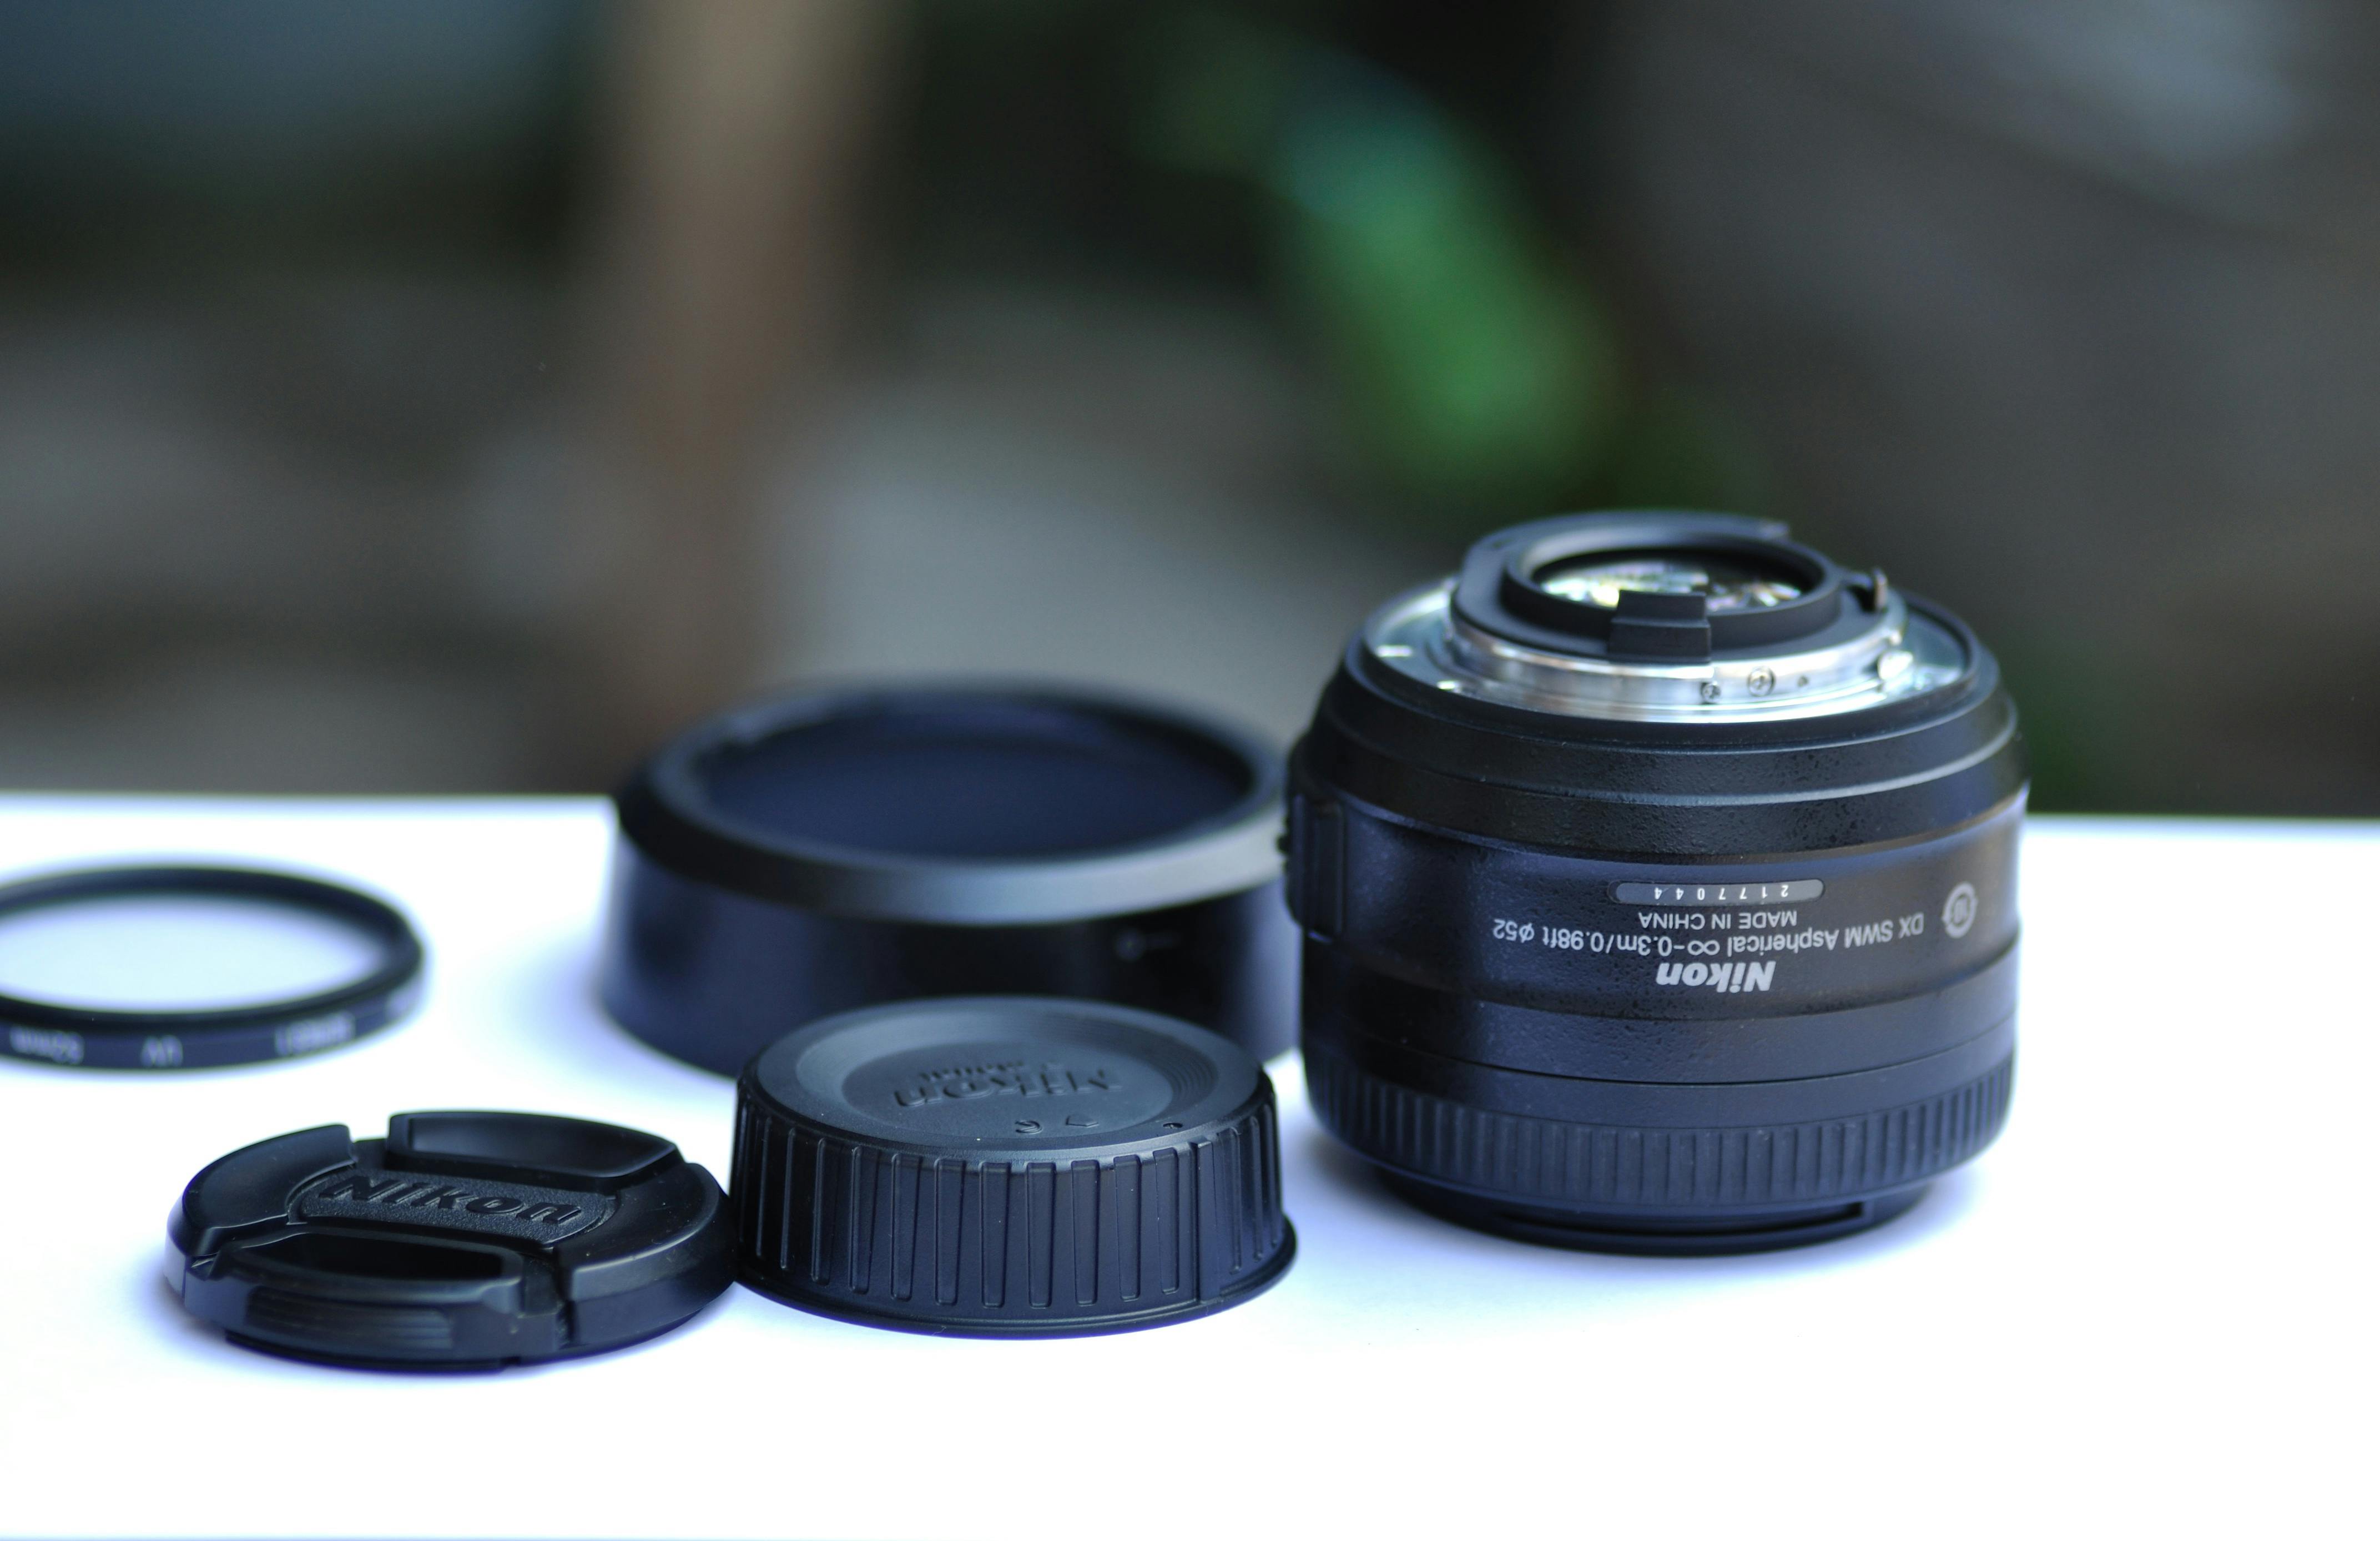 Camera Lens Set on Table · Free Stock Photo